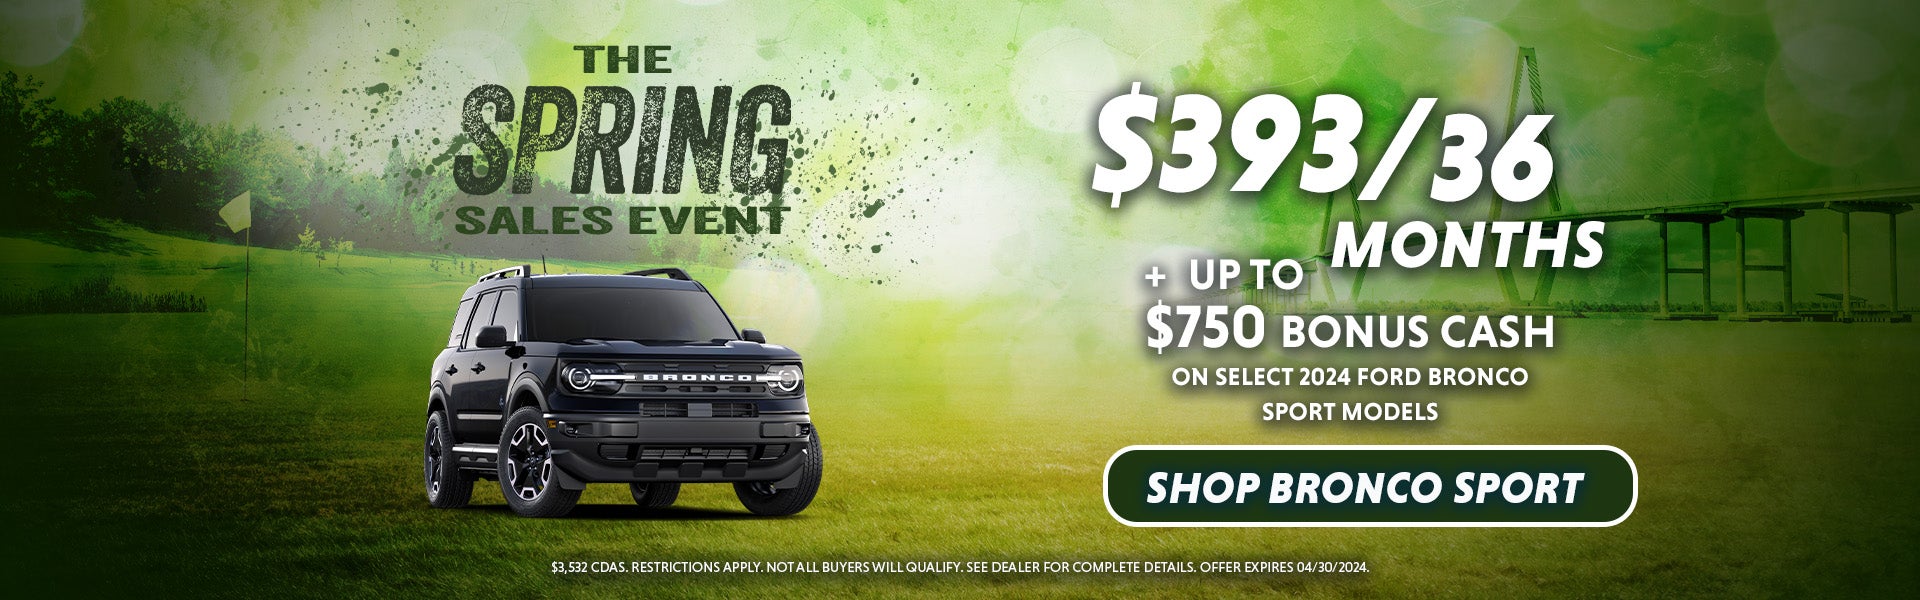 Lease $393/36 months + $750 Bonus Cash on 2024 Bronco Sport